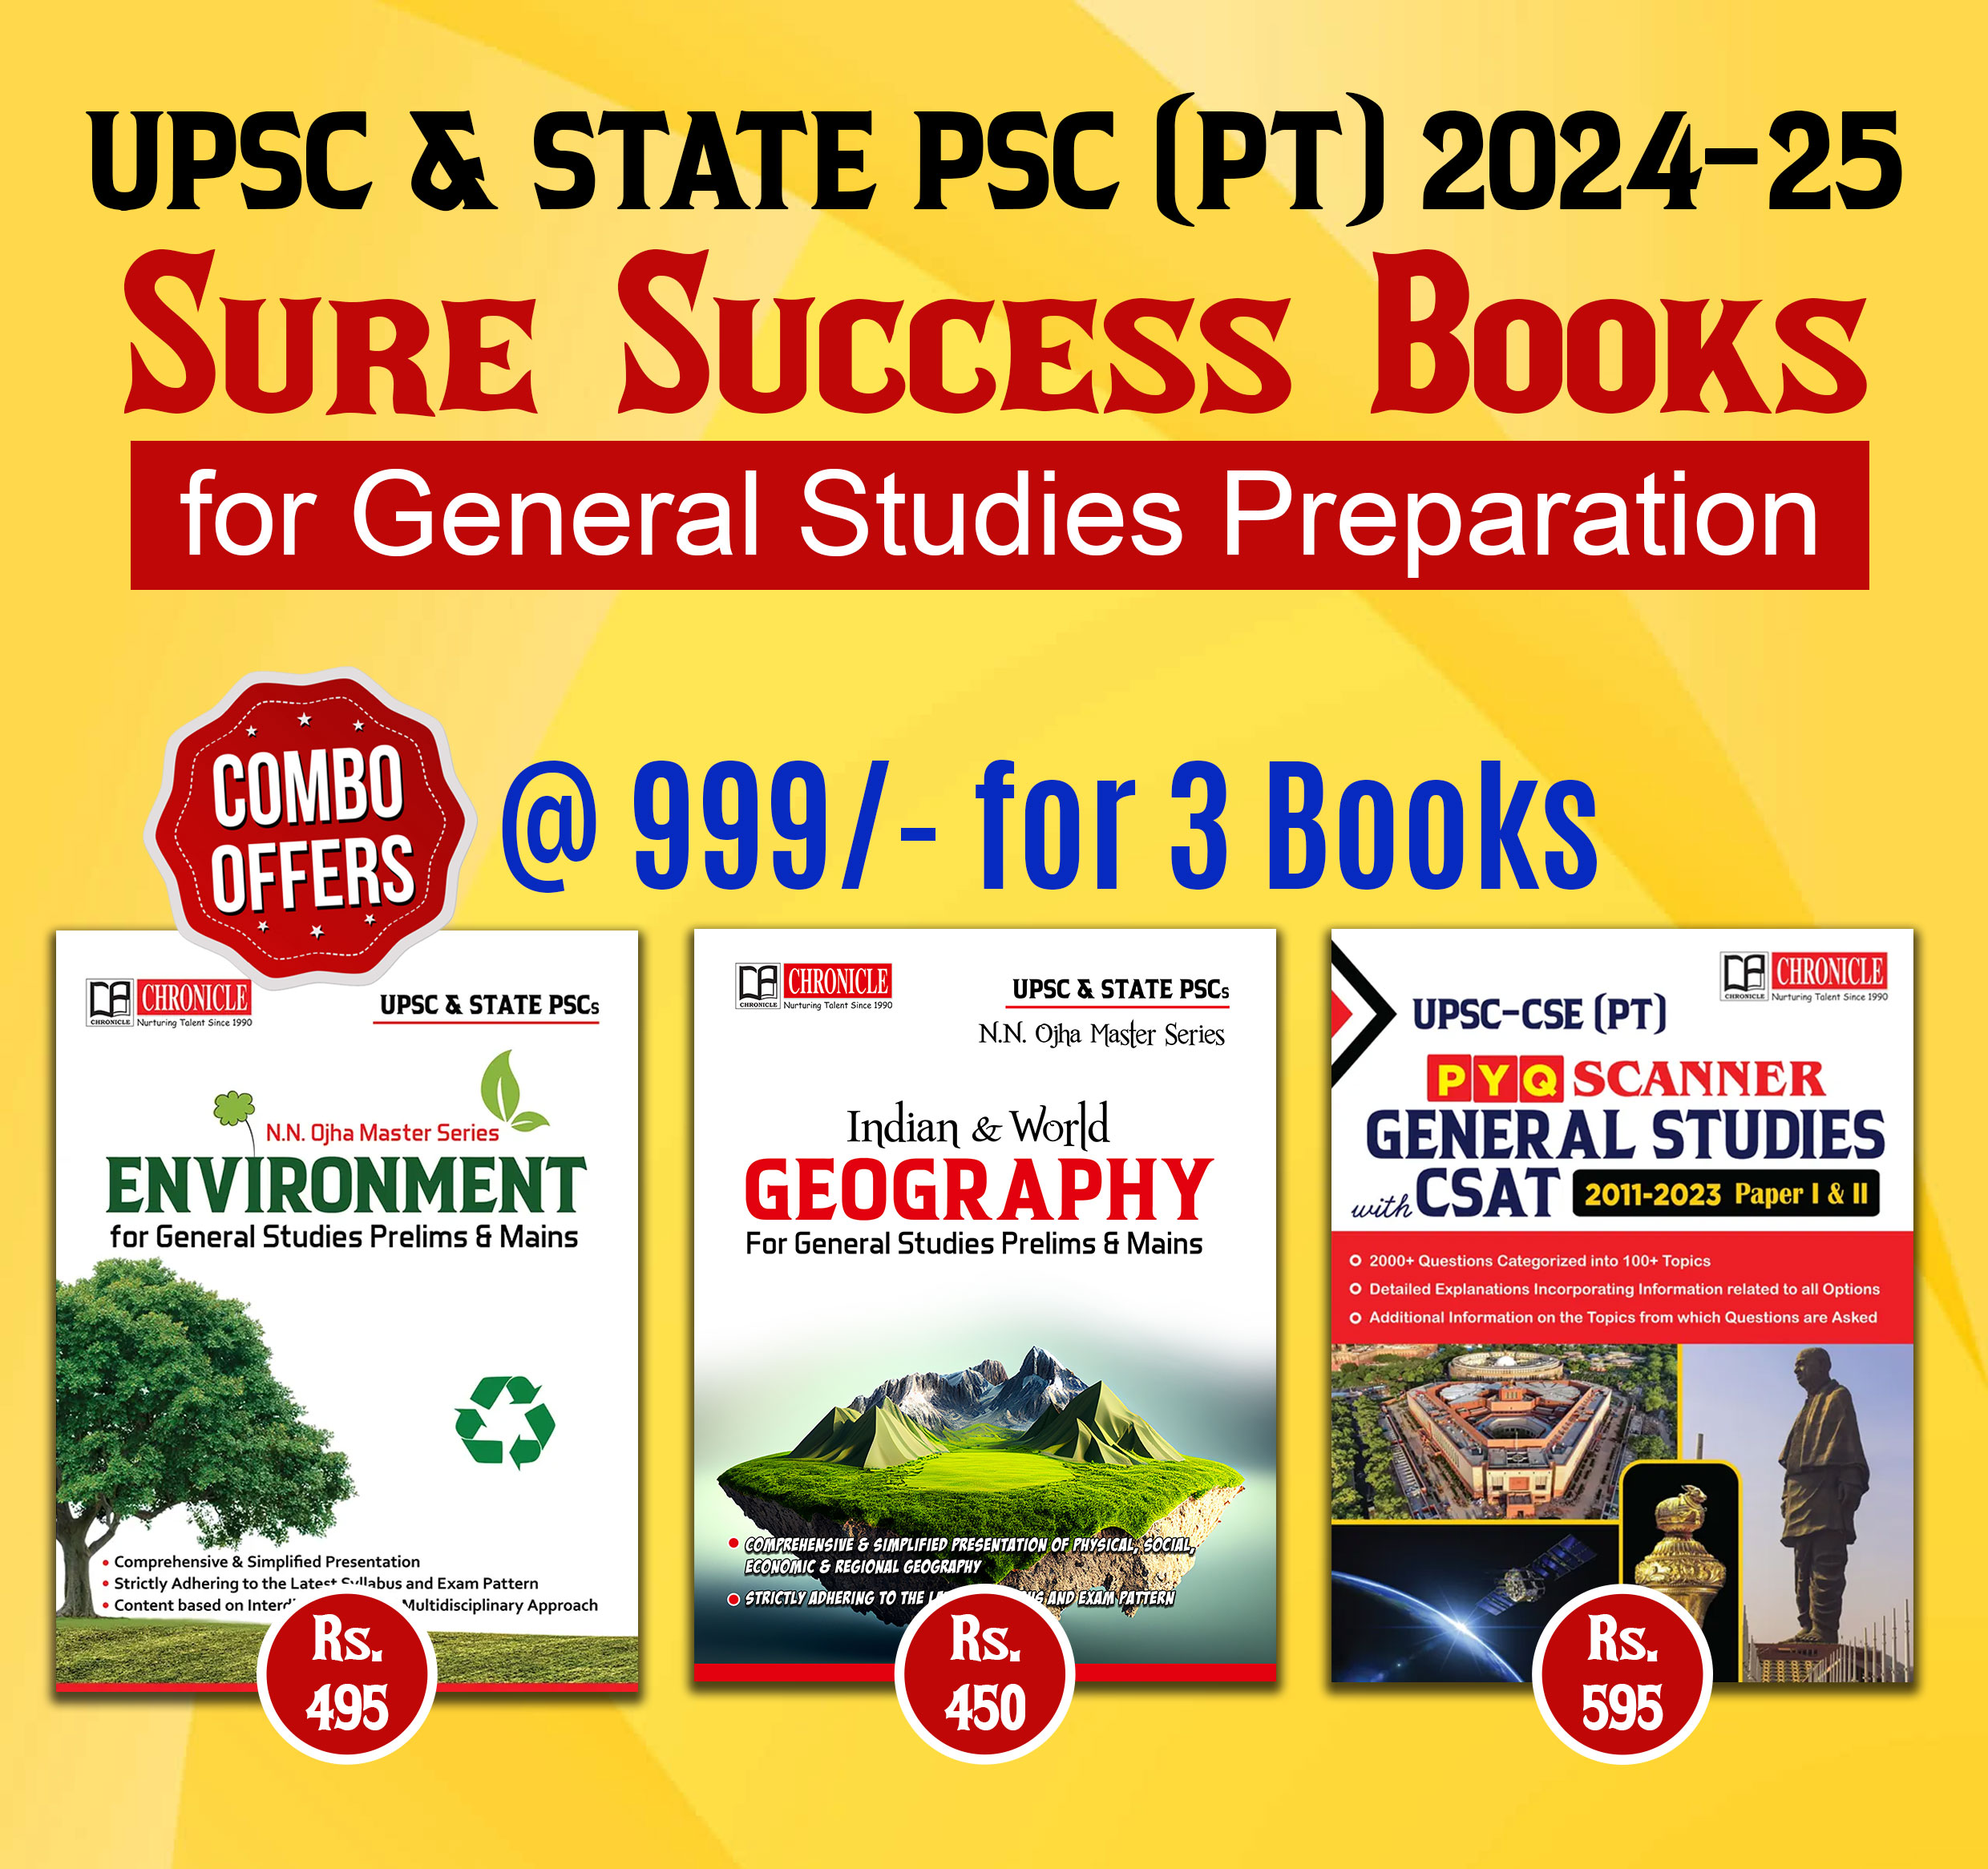 UPSC & State PSC (PT) 2024-25 Sure Success Books For GS Preparation